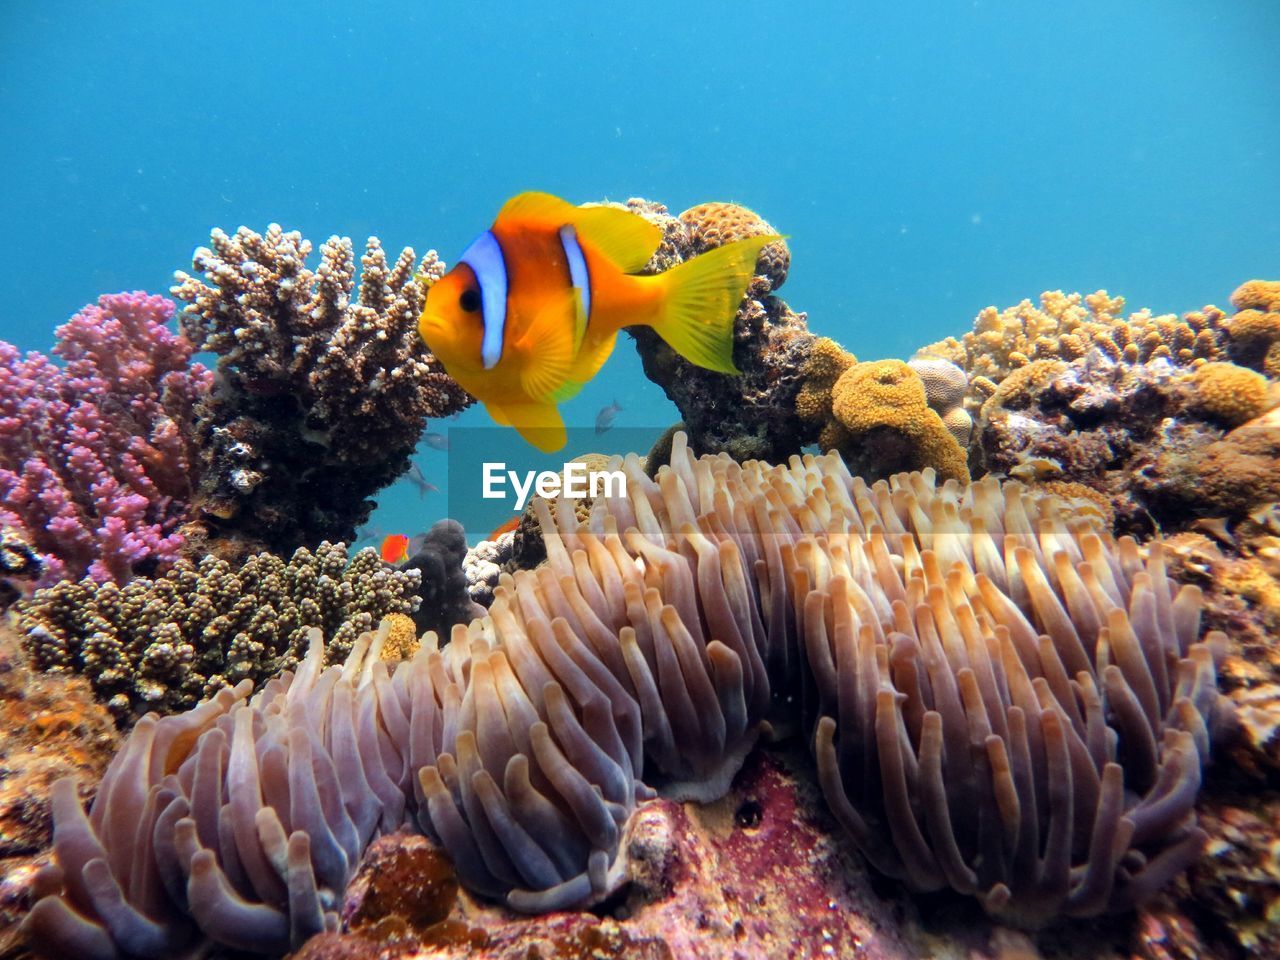 Clown fish swimming in sea with corals